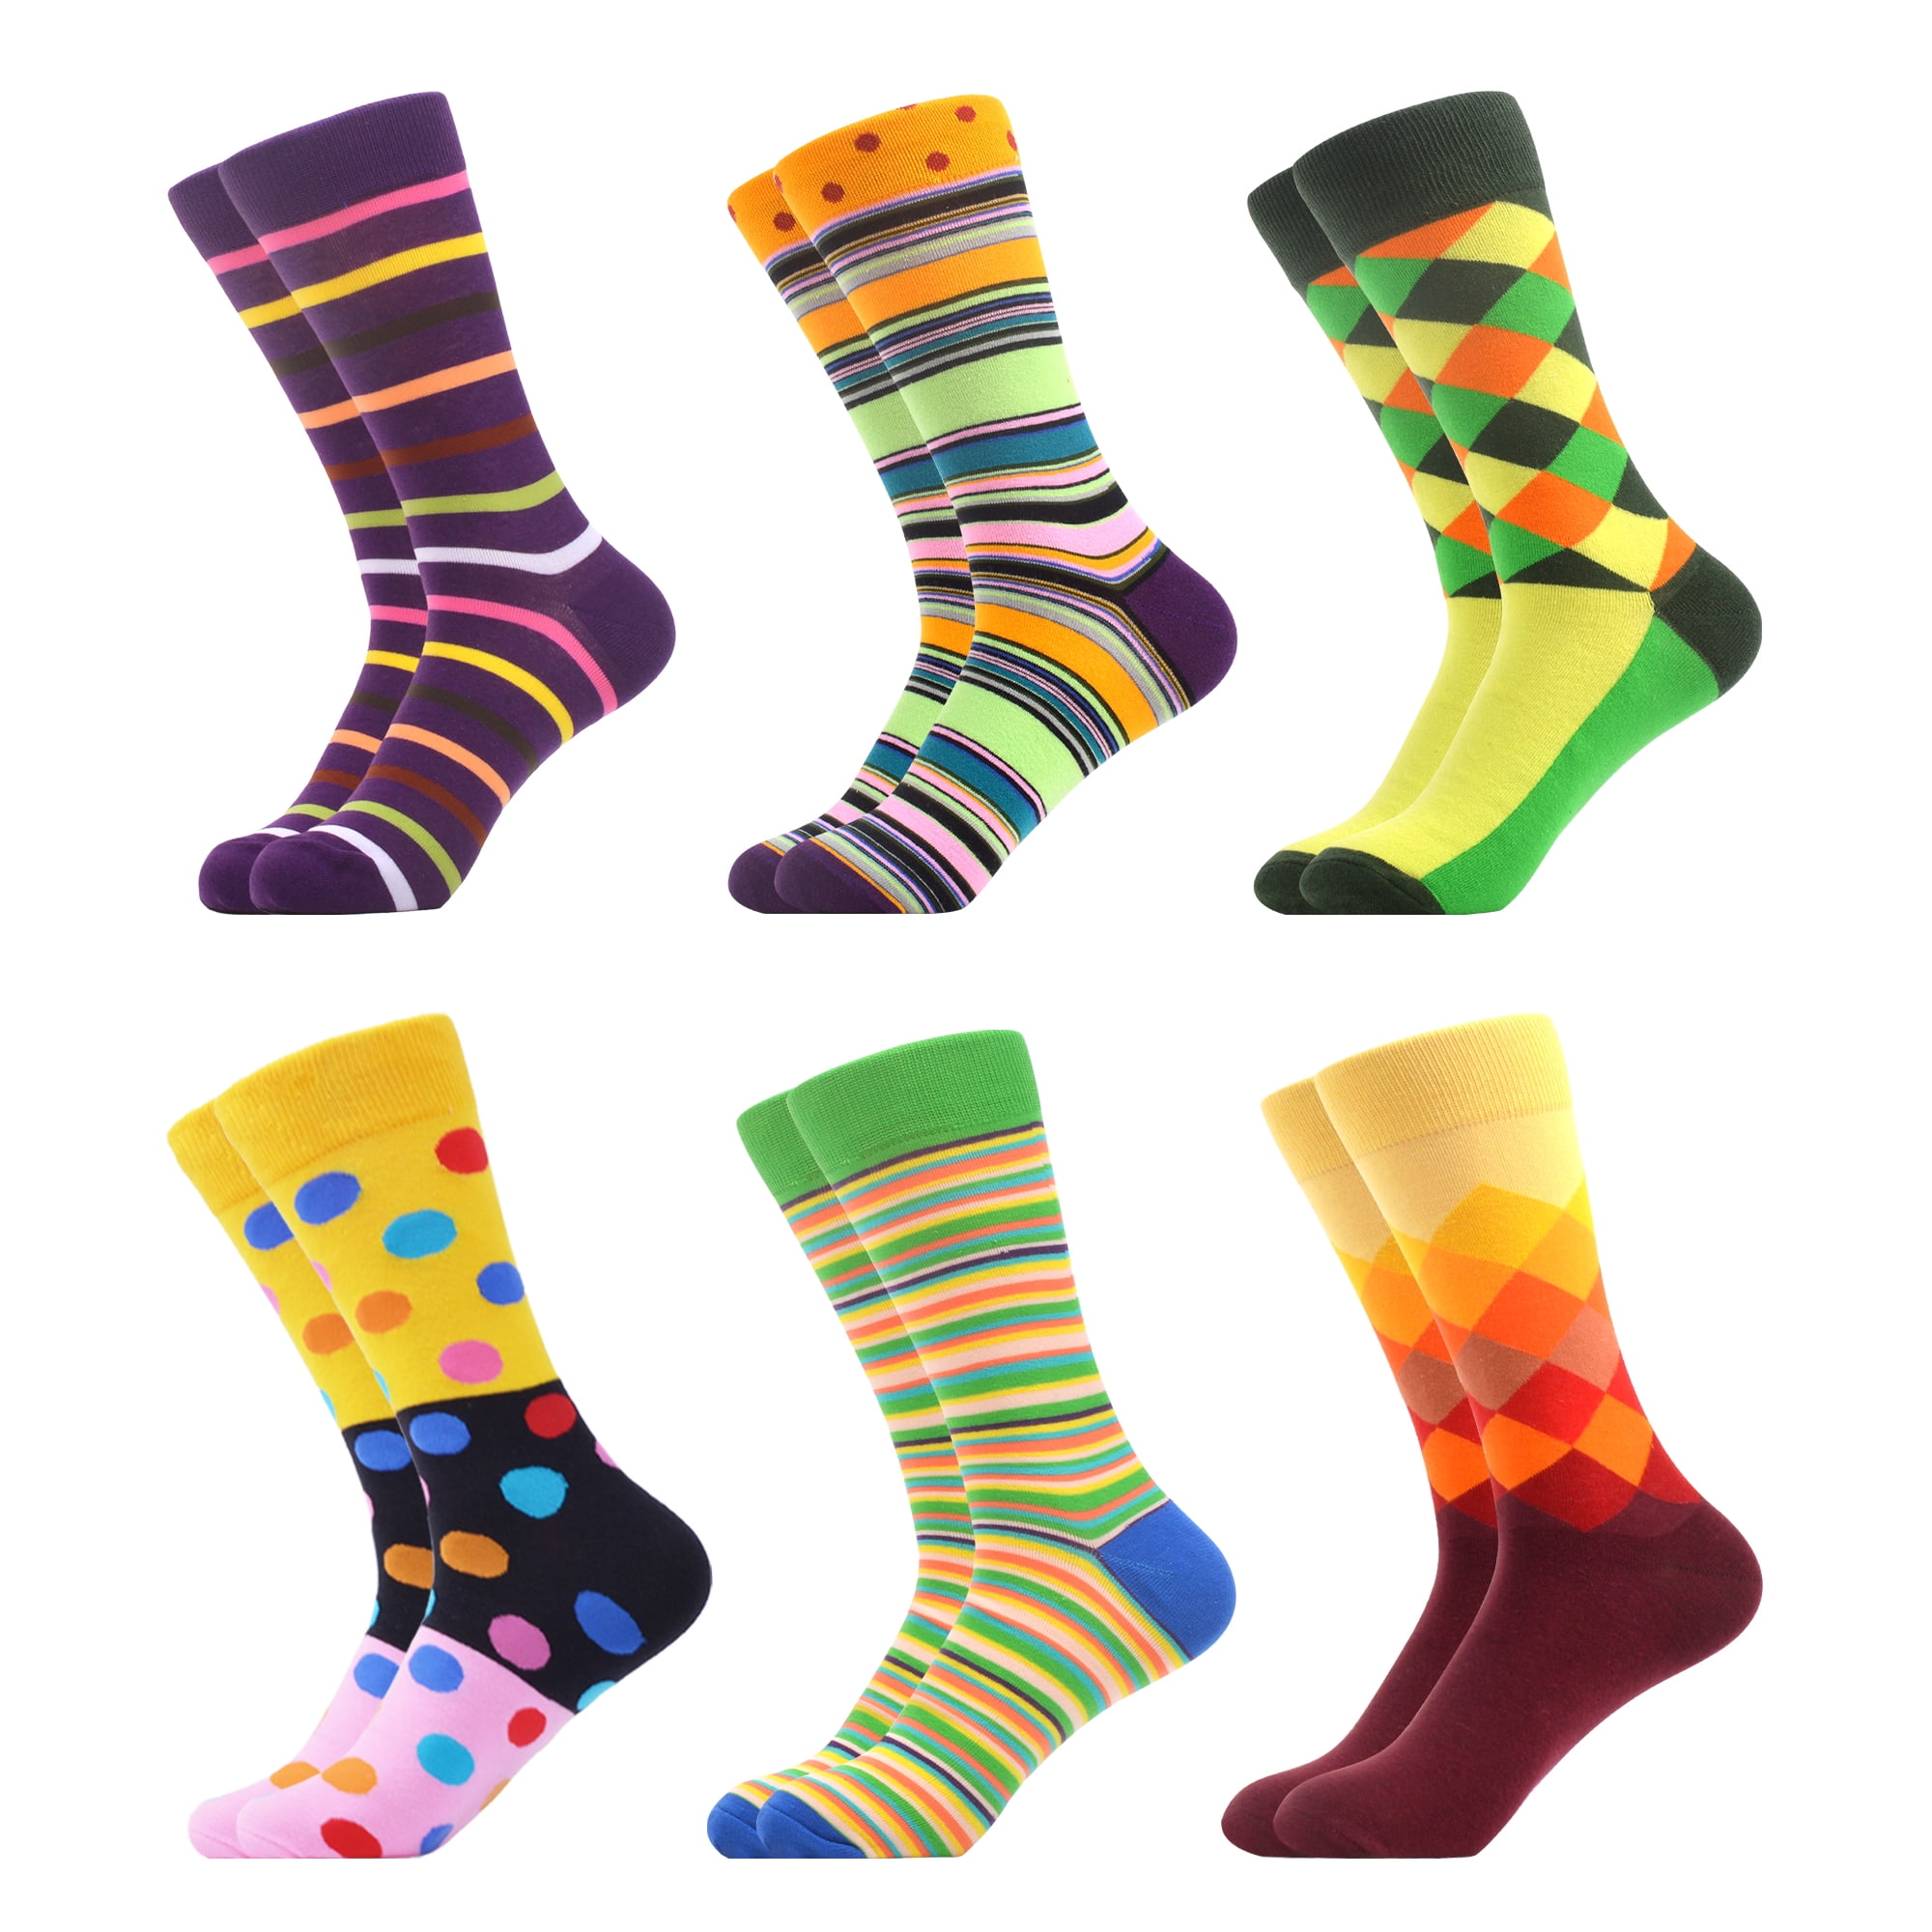 WeciBor Men Colorful Striped Combed Cotton Crew Socks Socks Size 10-13 ...